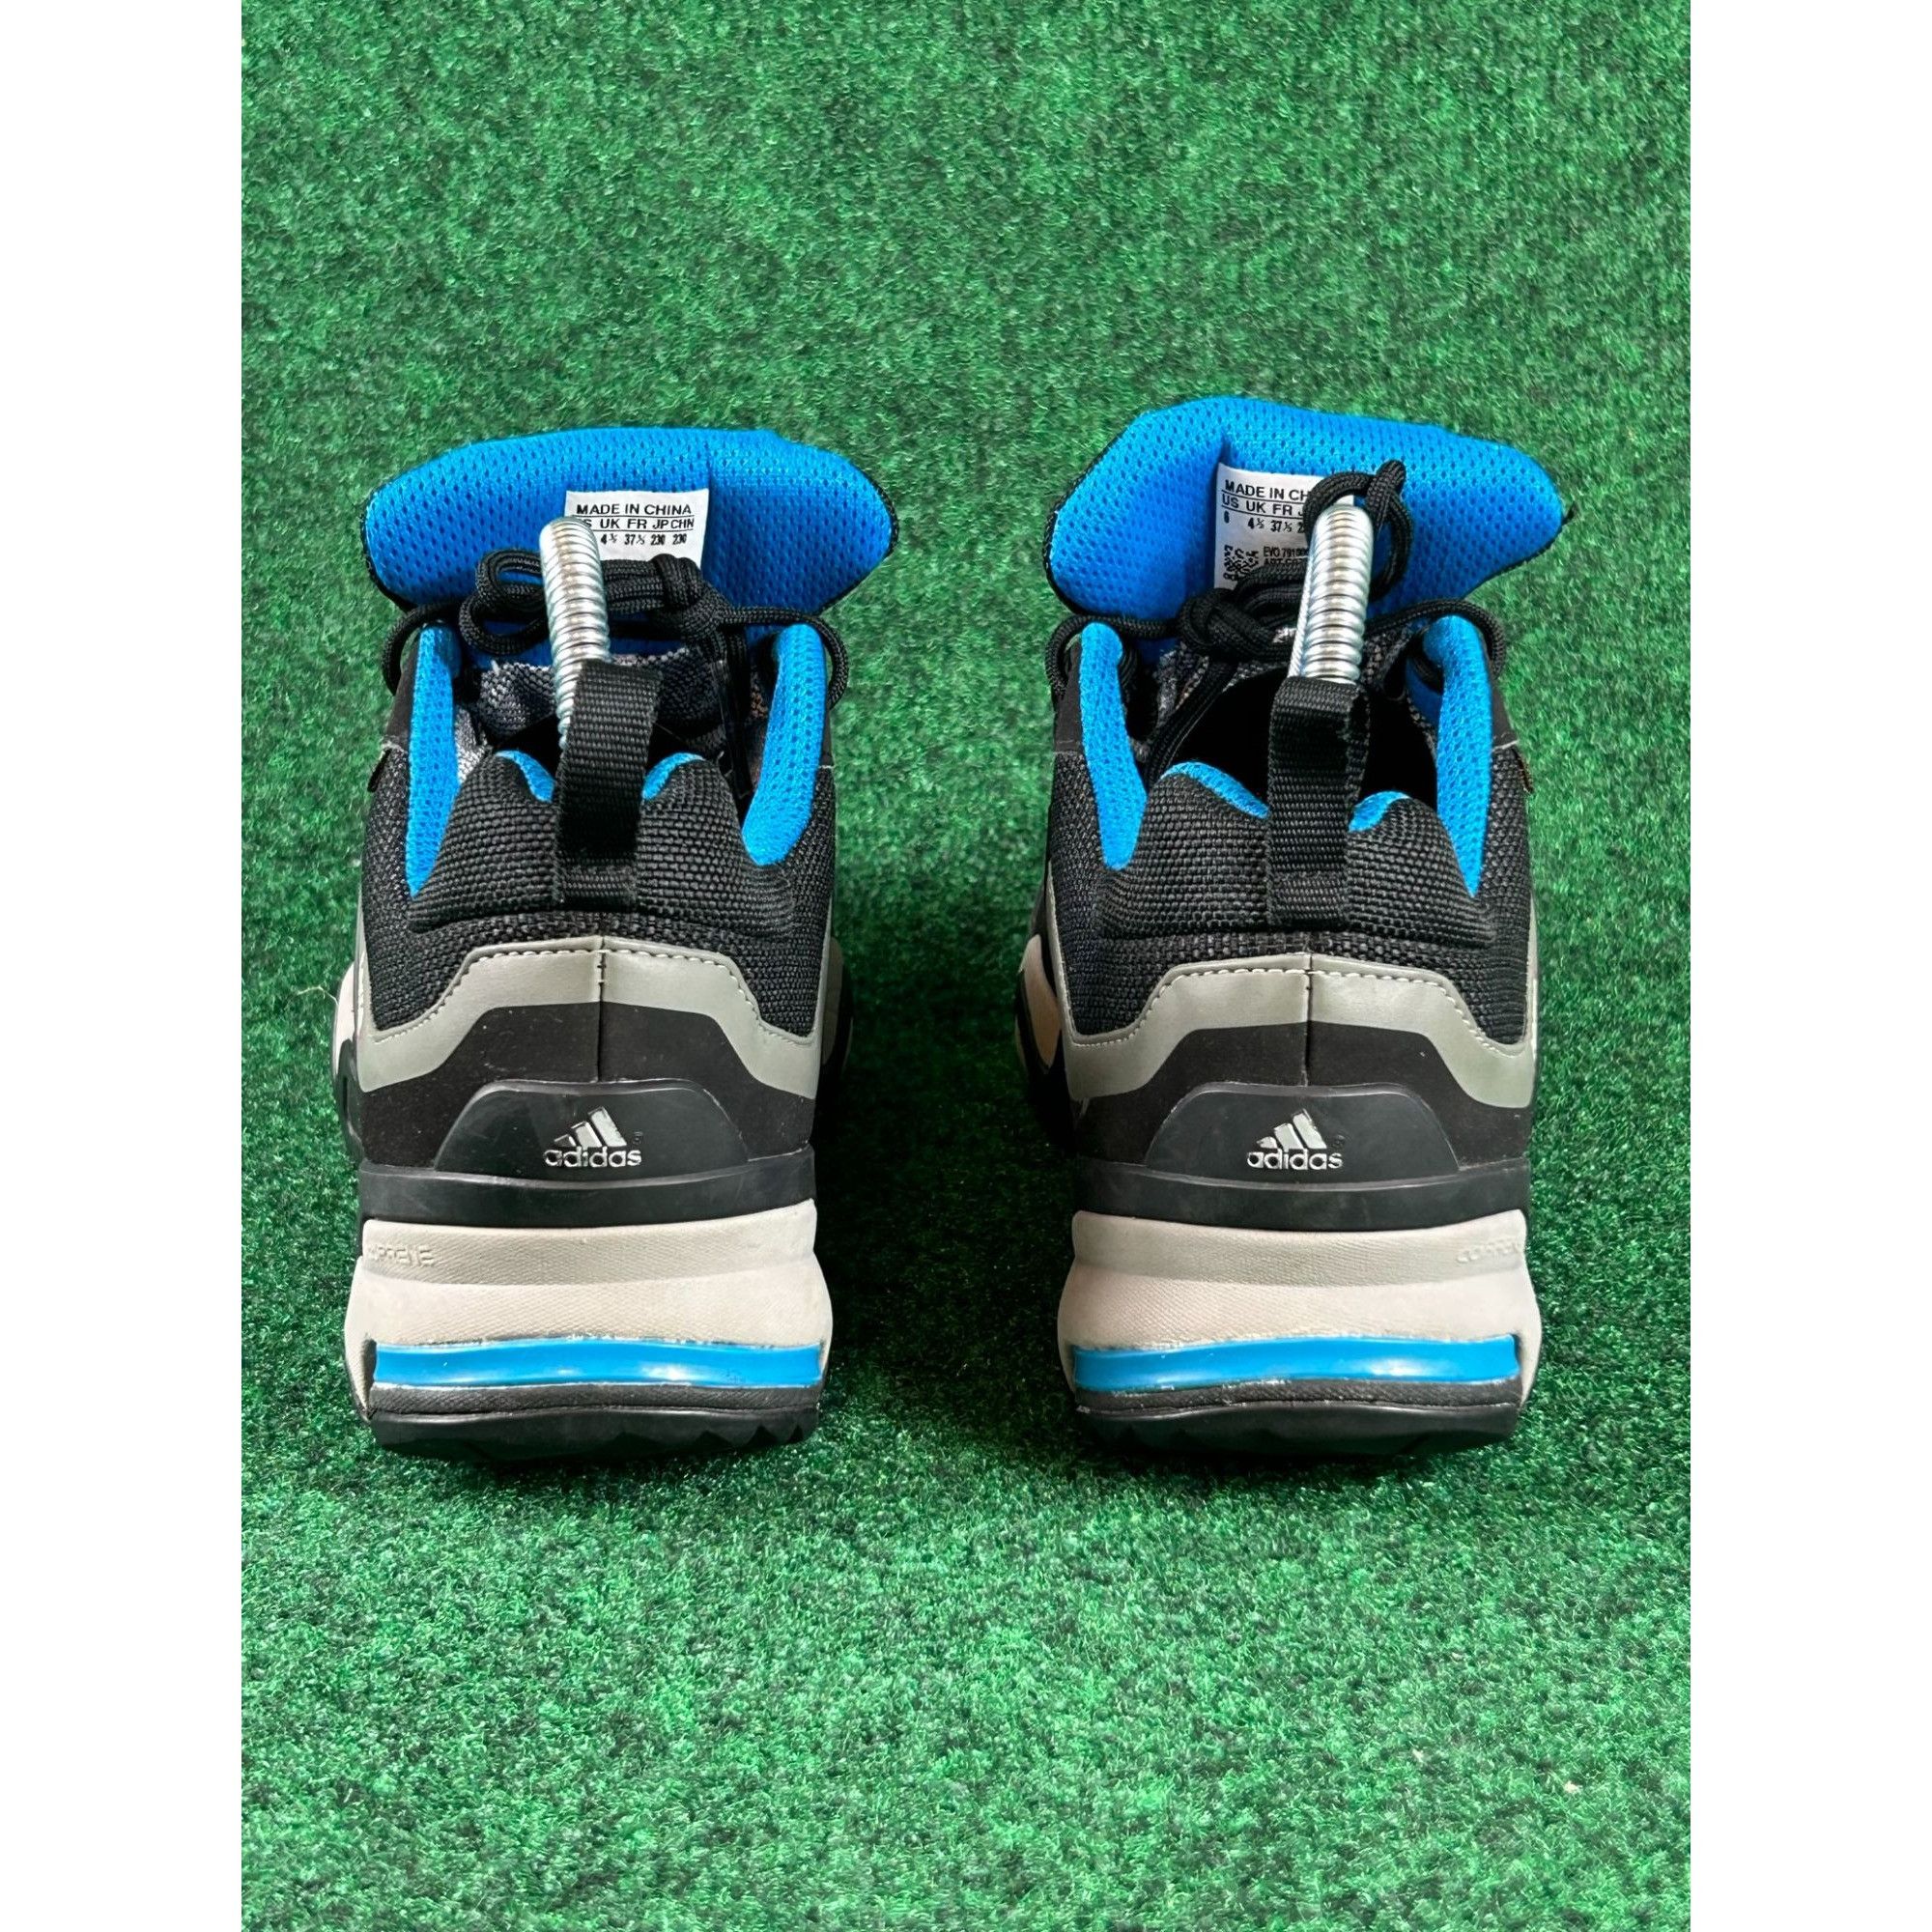 Adidas Adidas Terrex Fast X GTX Black & Blue Athletic Shoes Women 6 Size US 6 / IT 36 - 5 Thumbnail